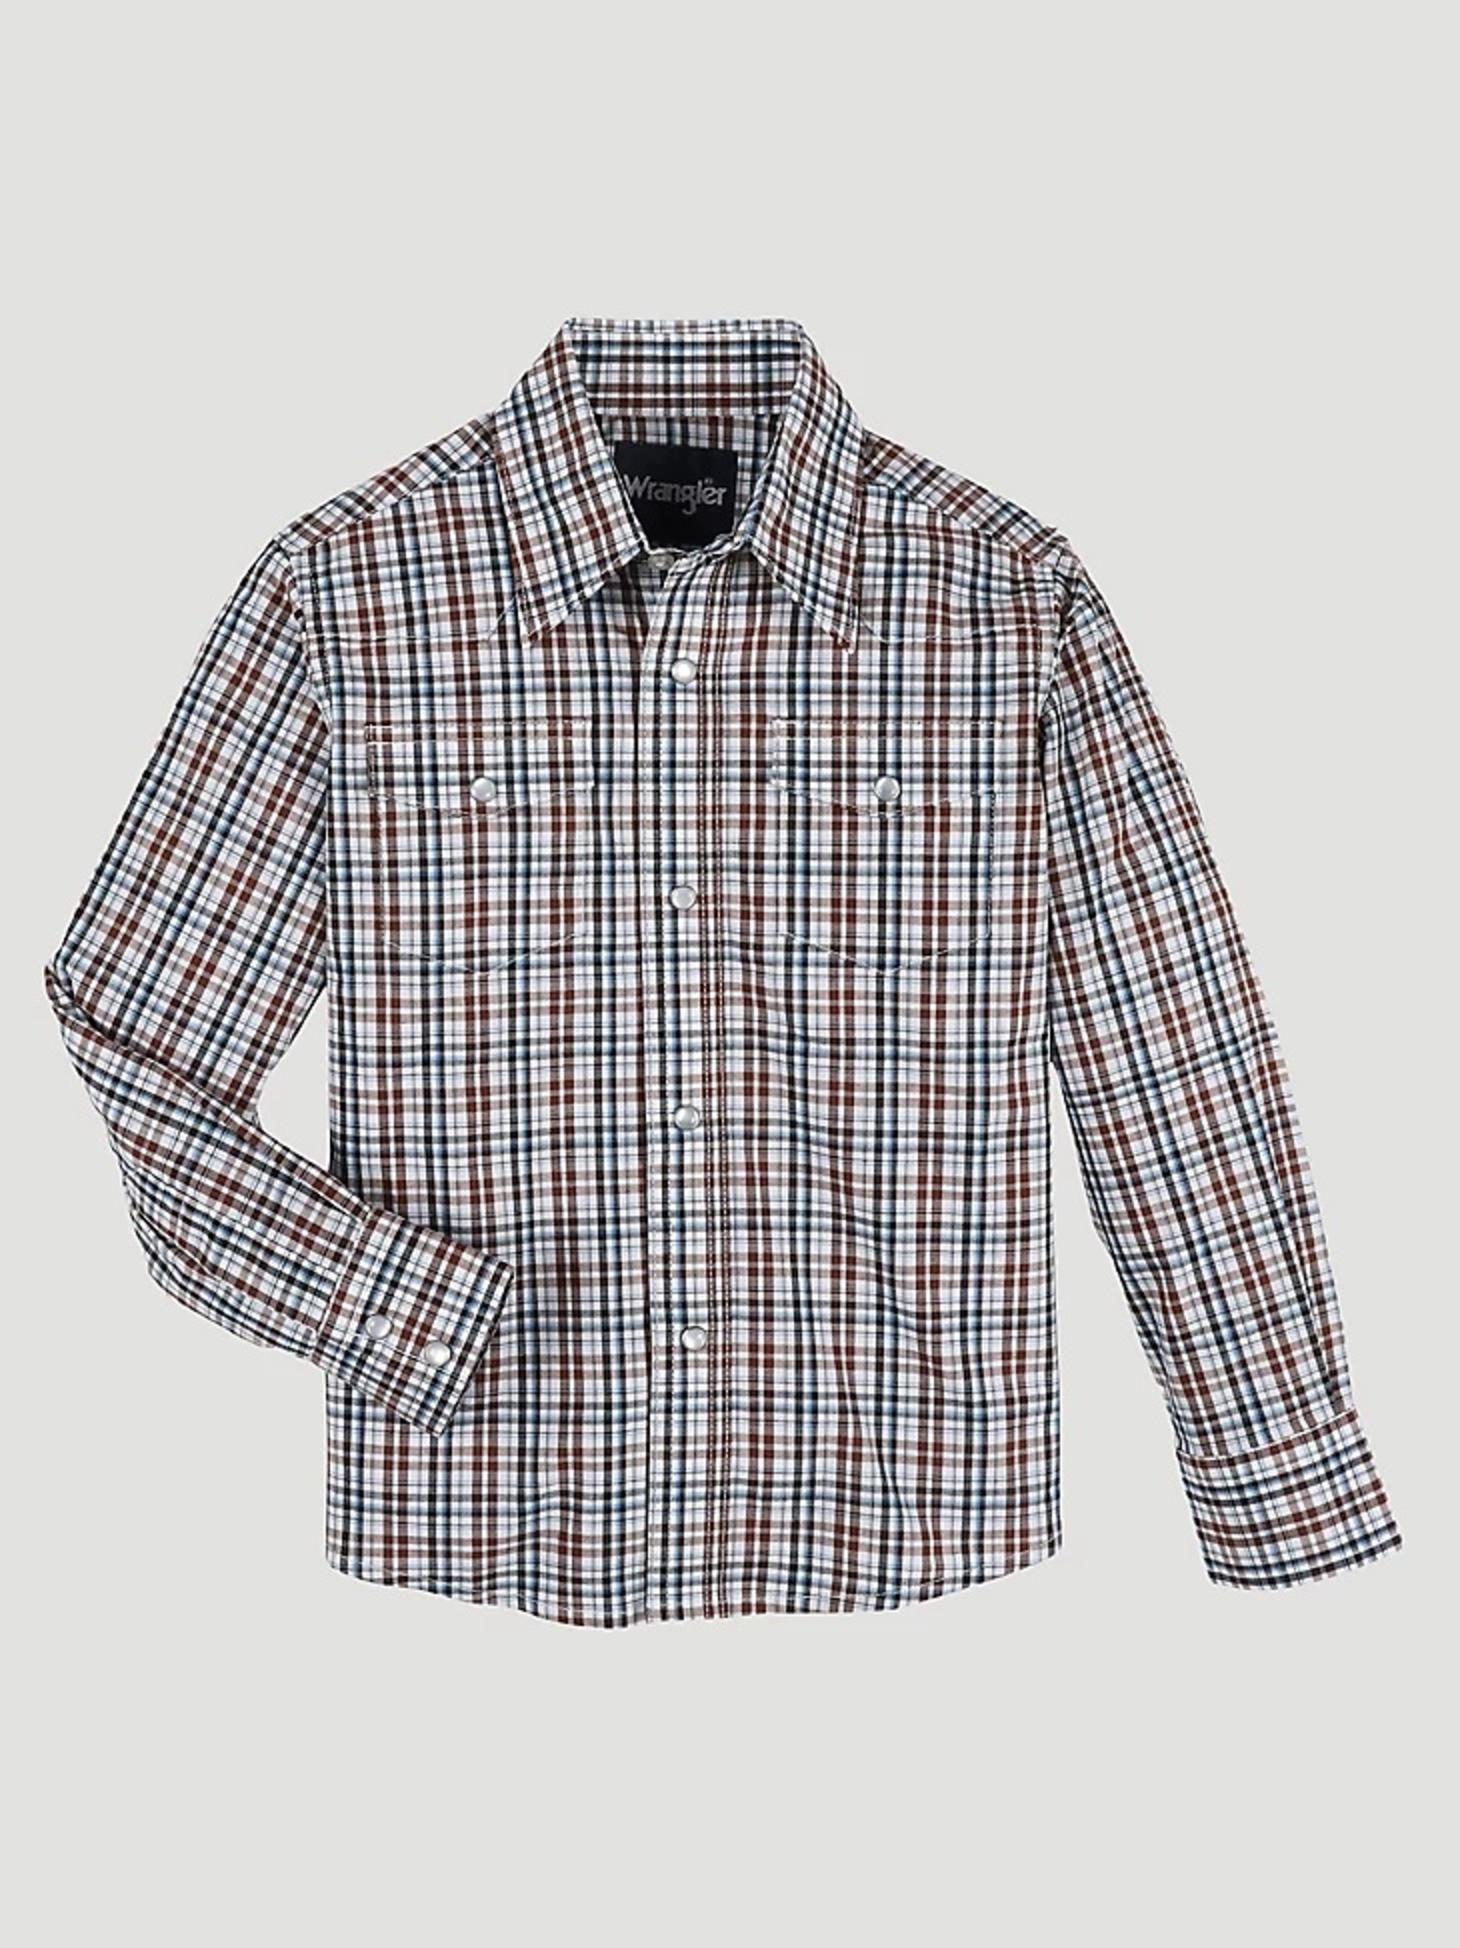 Boy's Long Sleeve Wrinkle Resist Western Snap Plaid Shirt FRONT VIEW IN brown